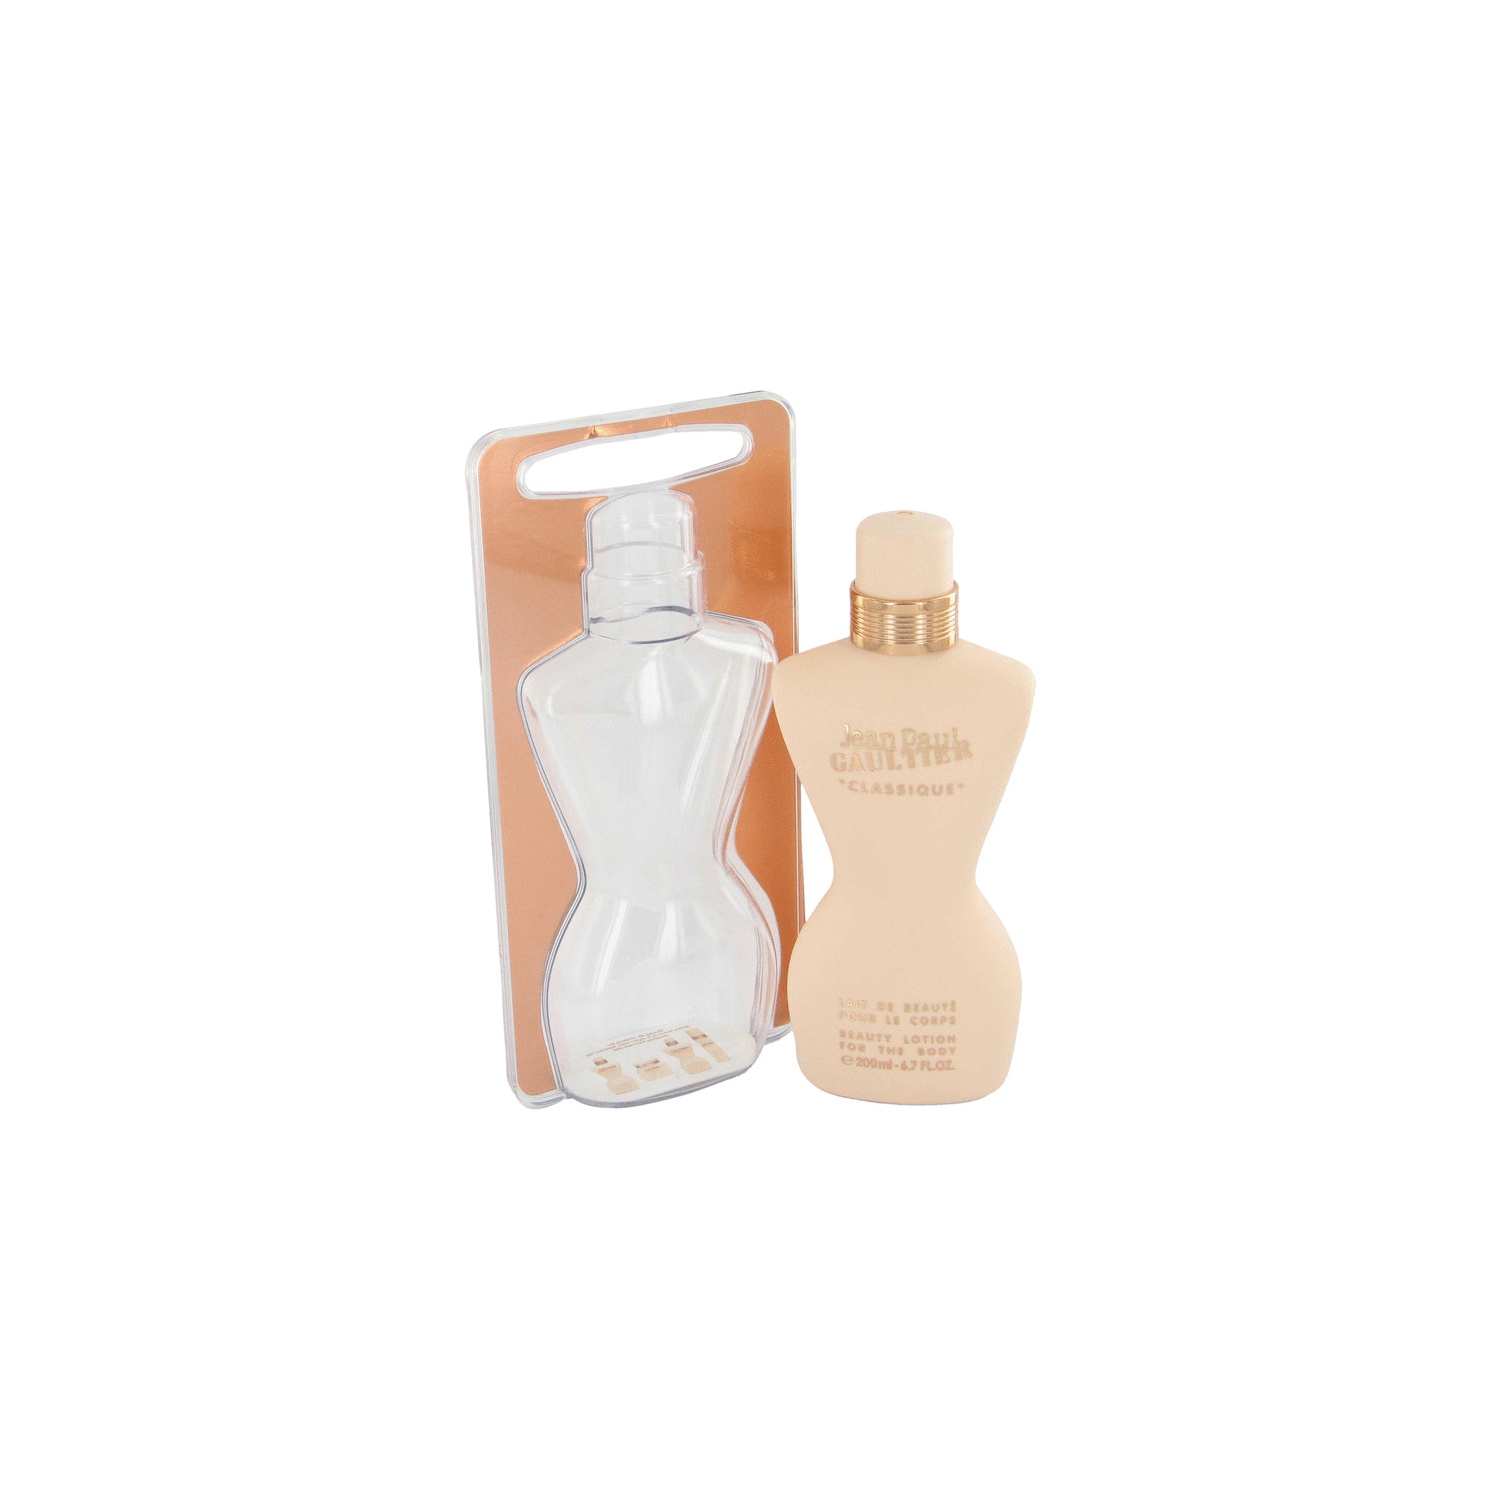 Le Classique Perfumed Body Lotion - 200ml-6.8oz